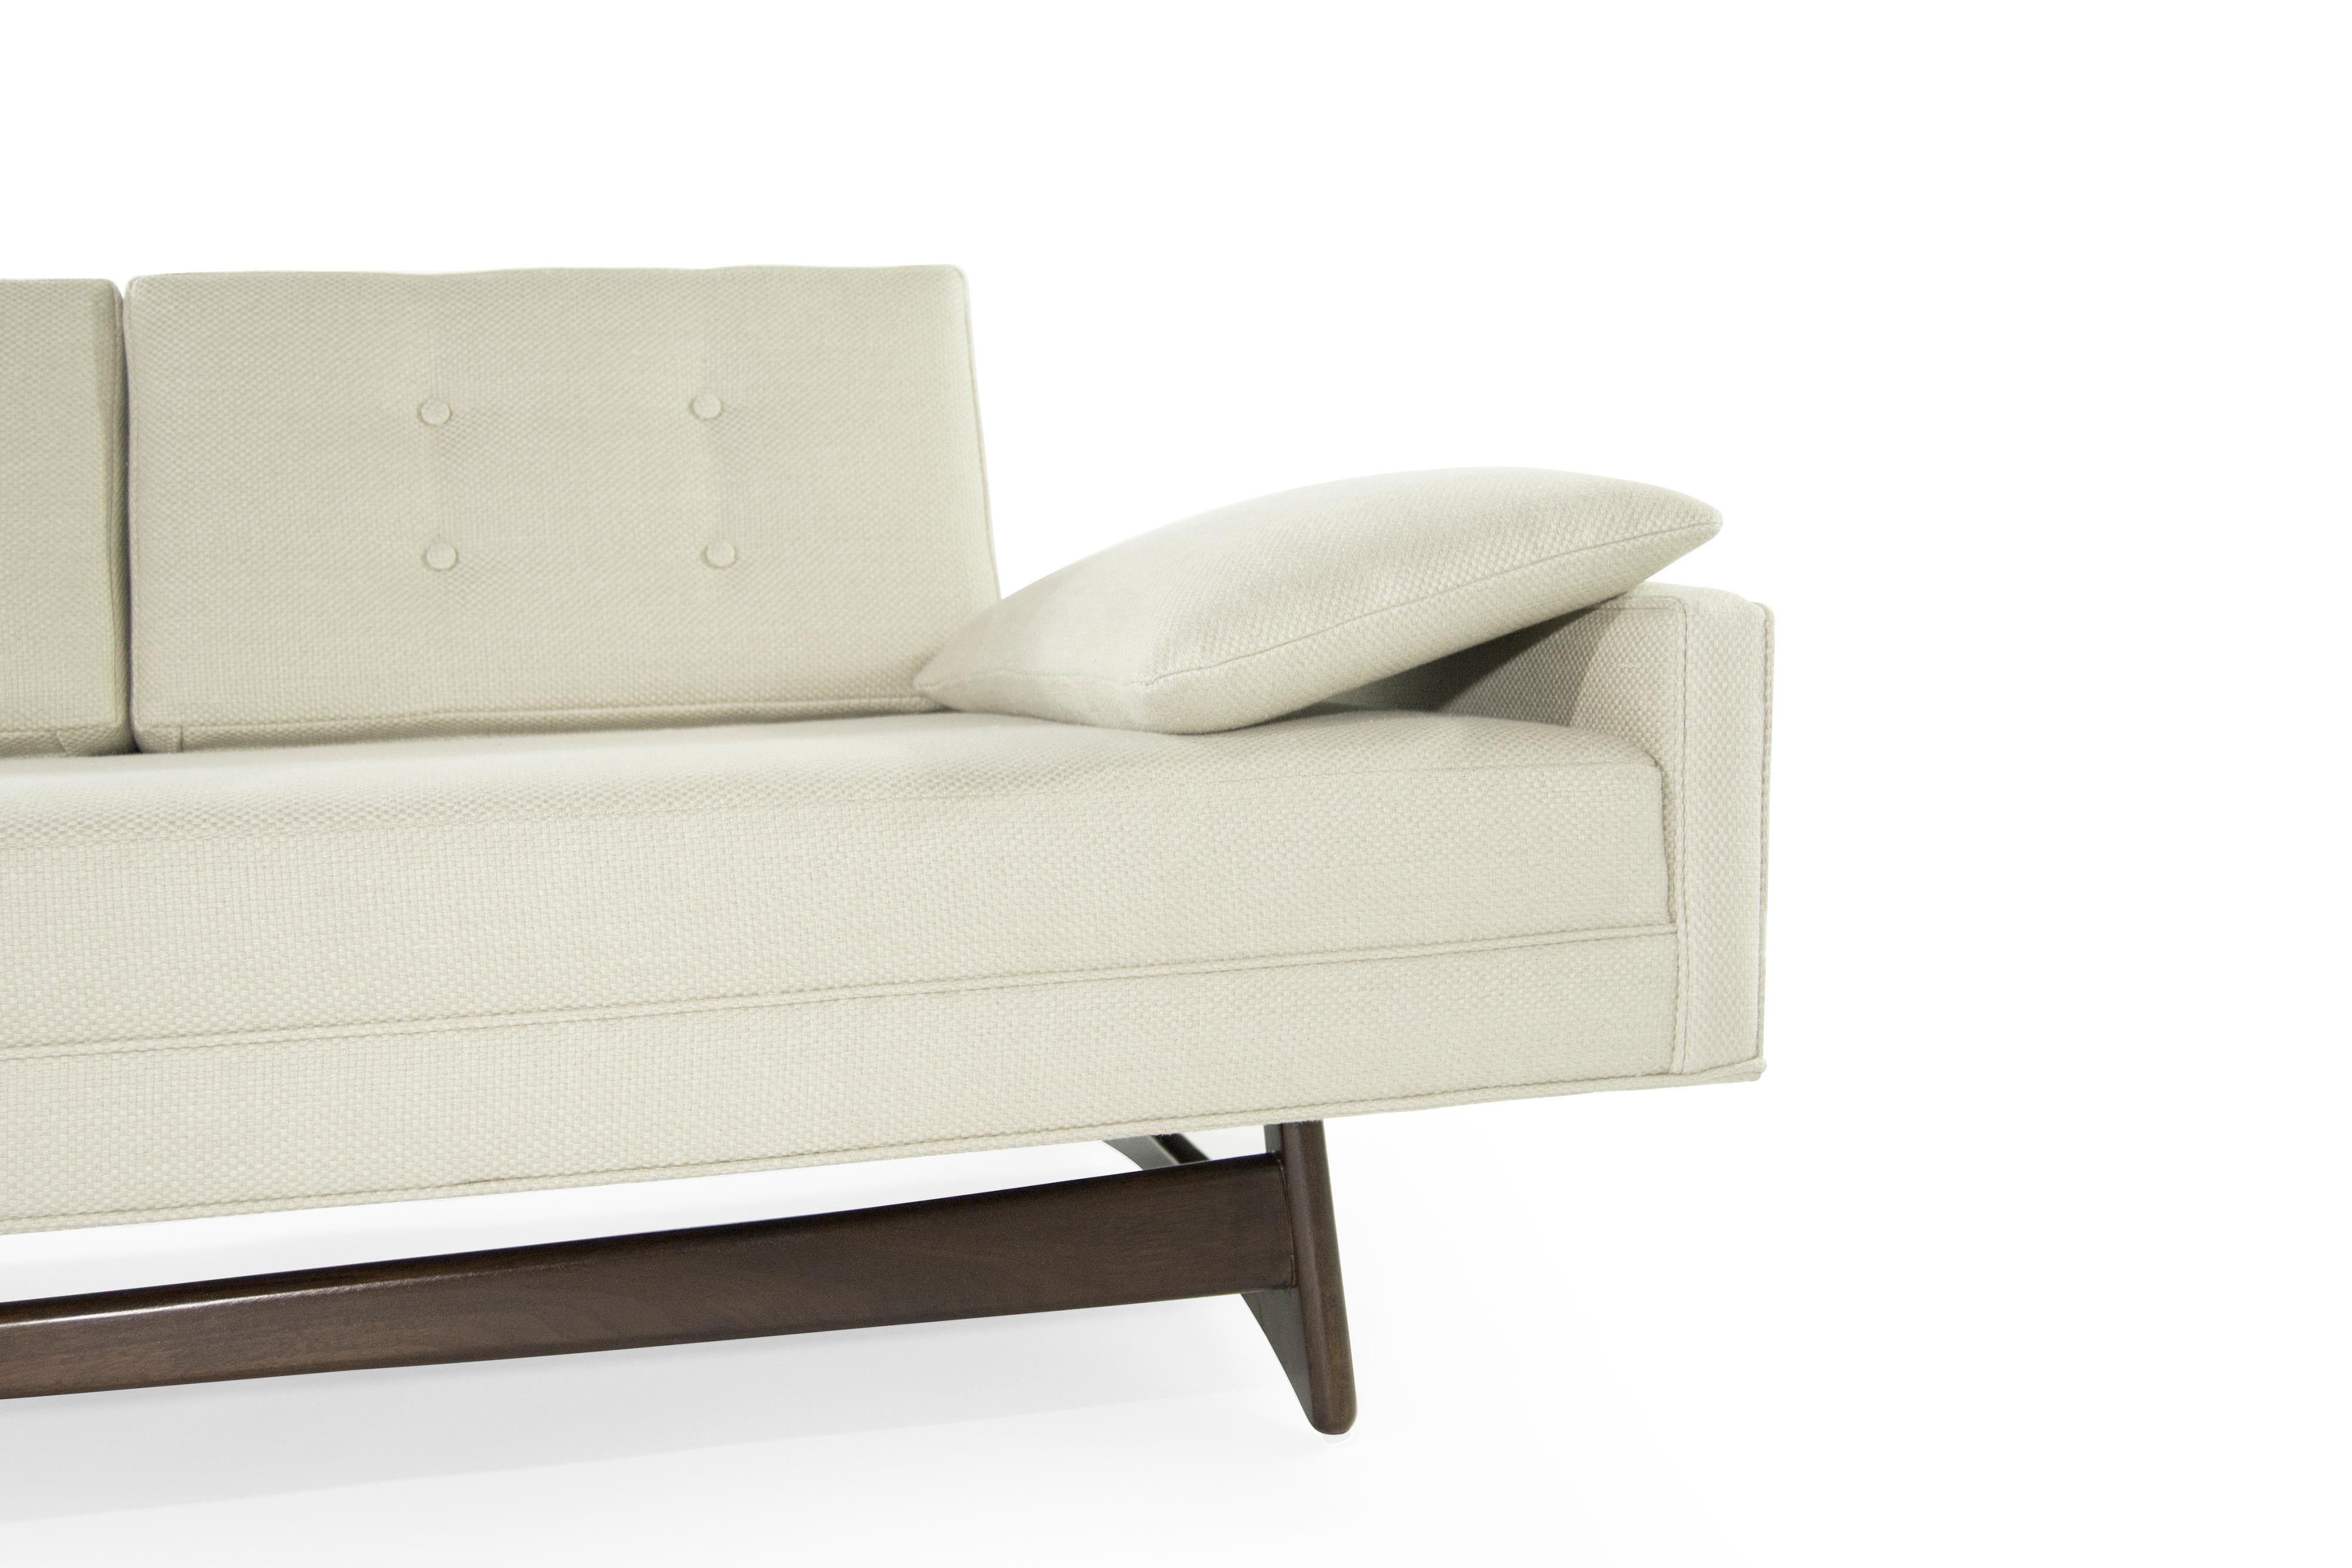 Adrian Pearsall for Craft Associates Sofa, Model 2408 2